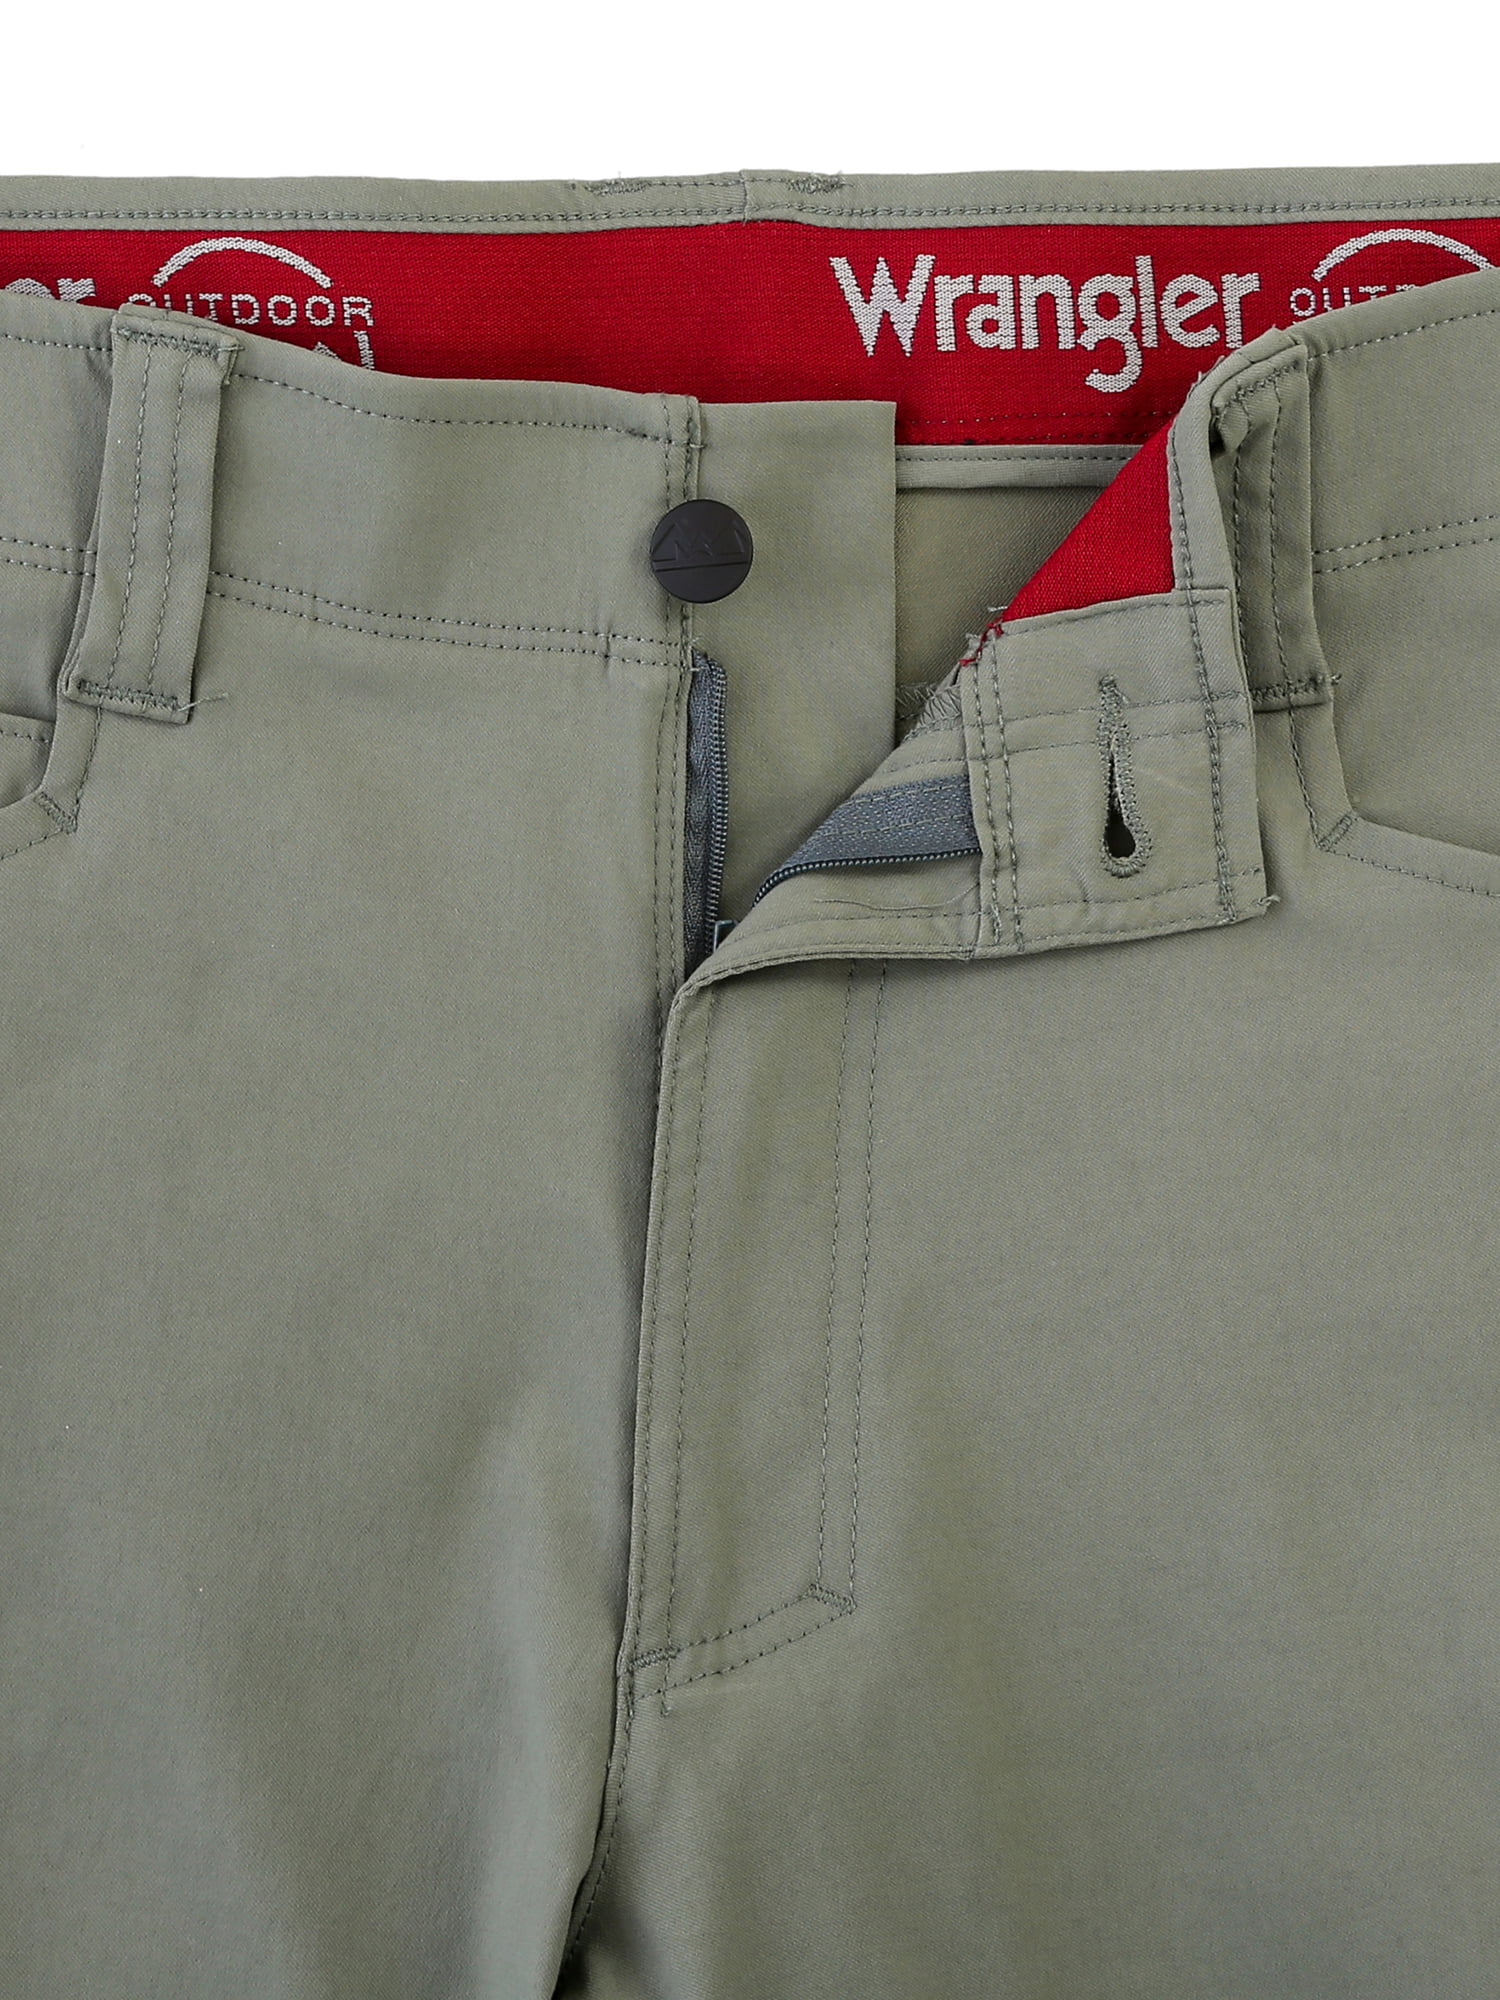 wrangler outdoor pants nw780sm